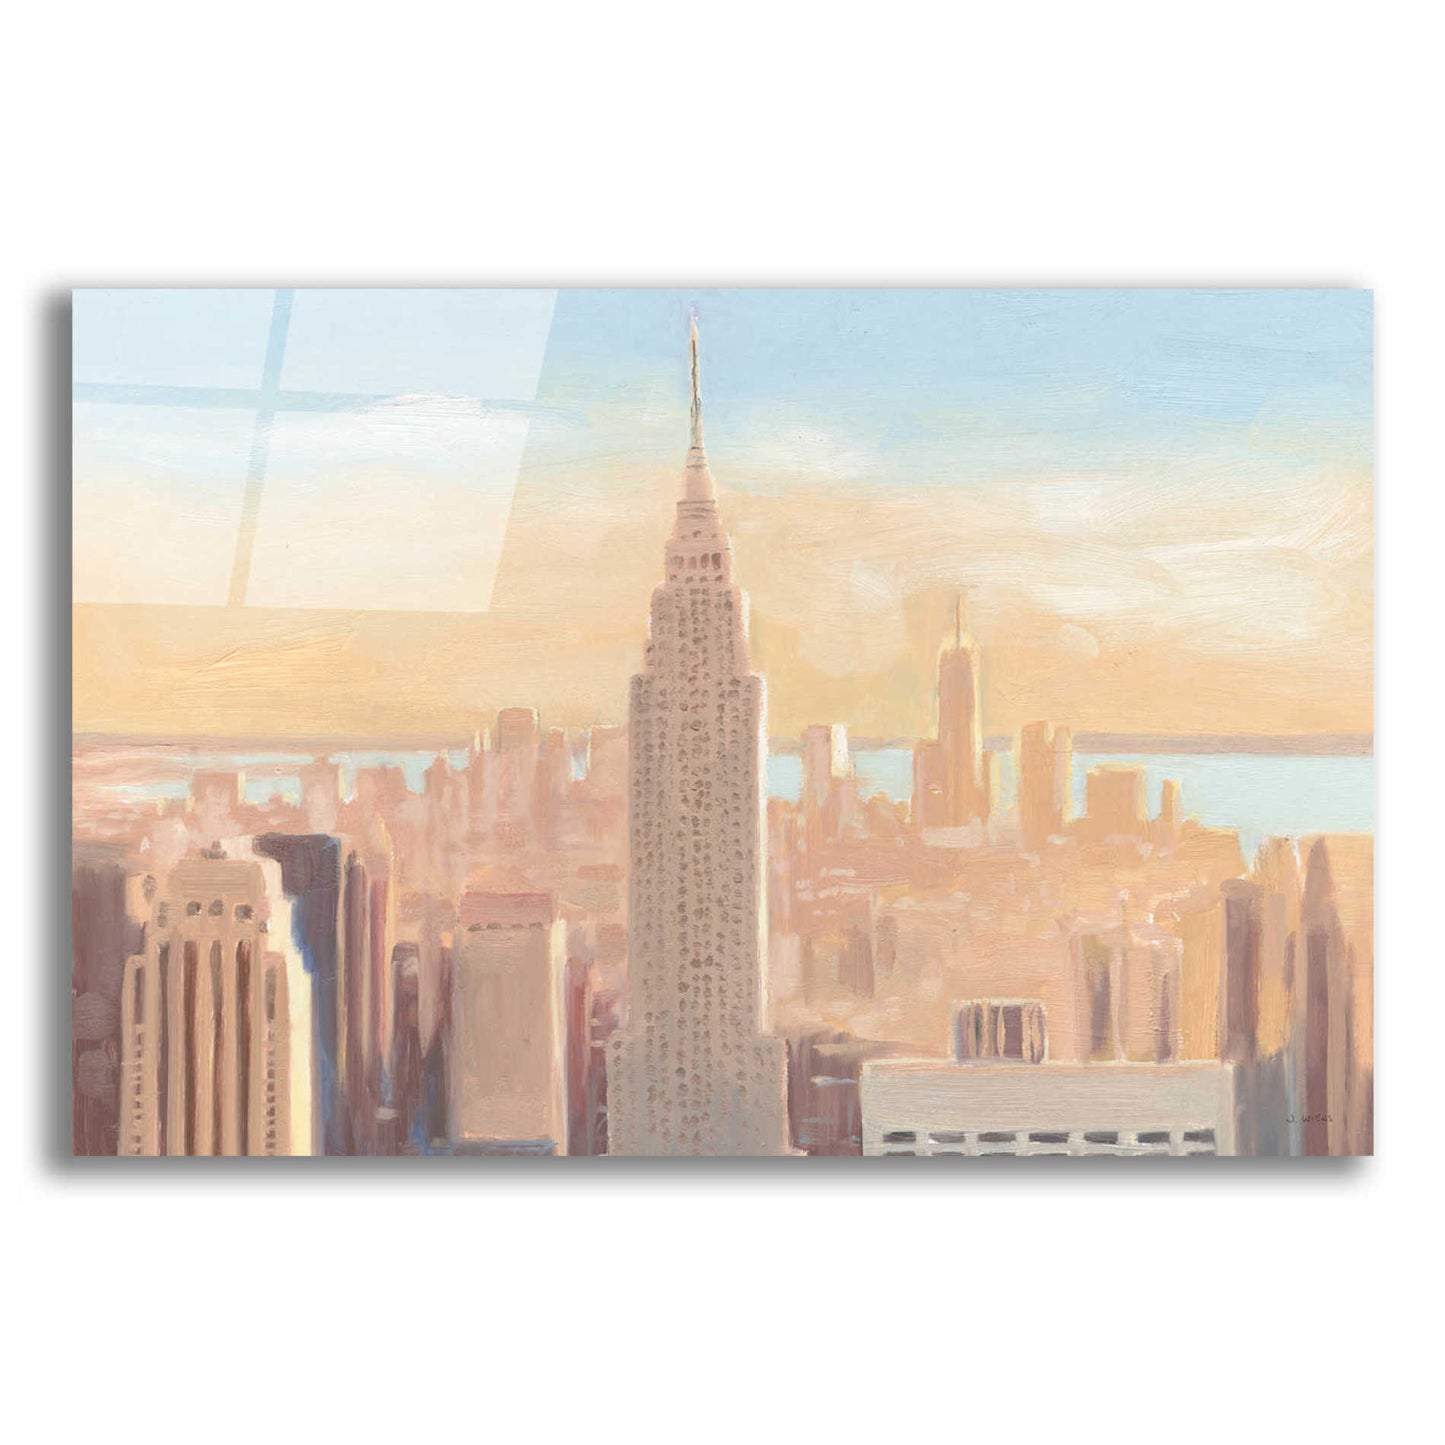 Epic Art 'Manhattan Dawn' by James Wiens, Acrylic Glass Wall Art,18x12x1.1x0,26x18x1.1x0,40x26x1.74x0,60x40x1.74x0